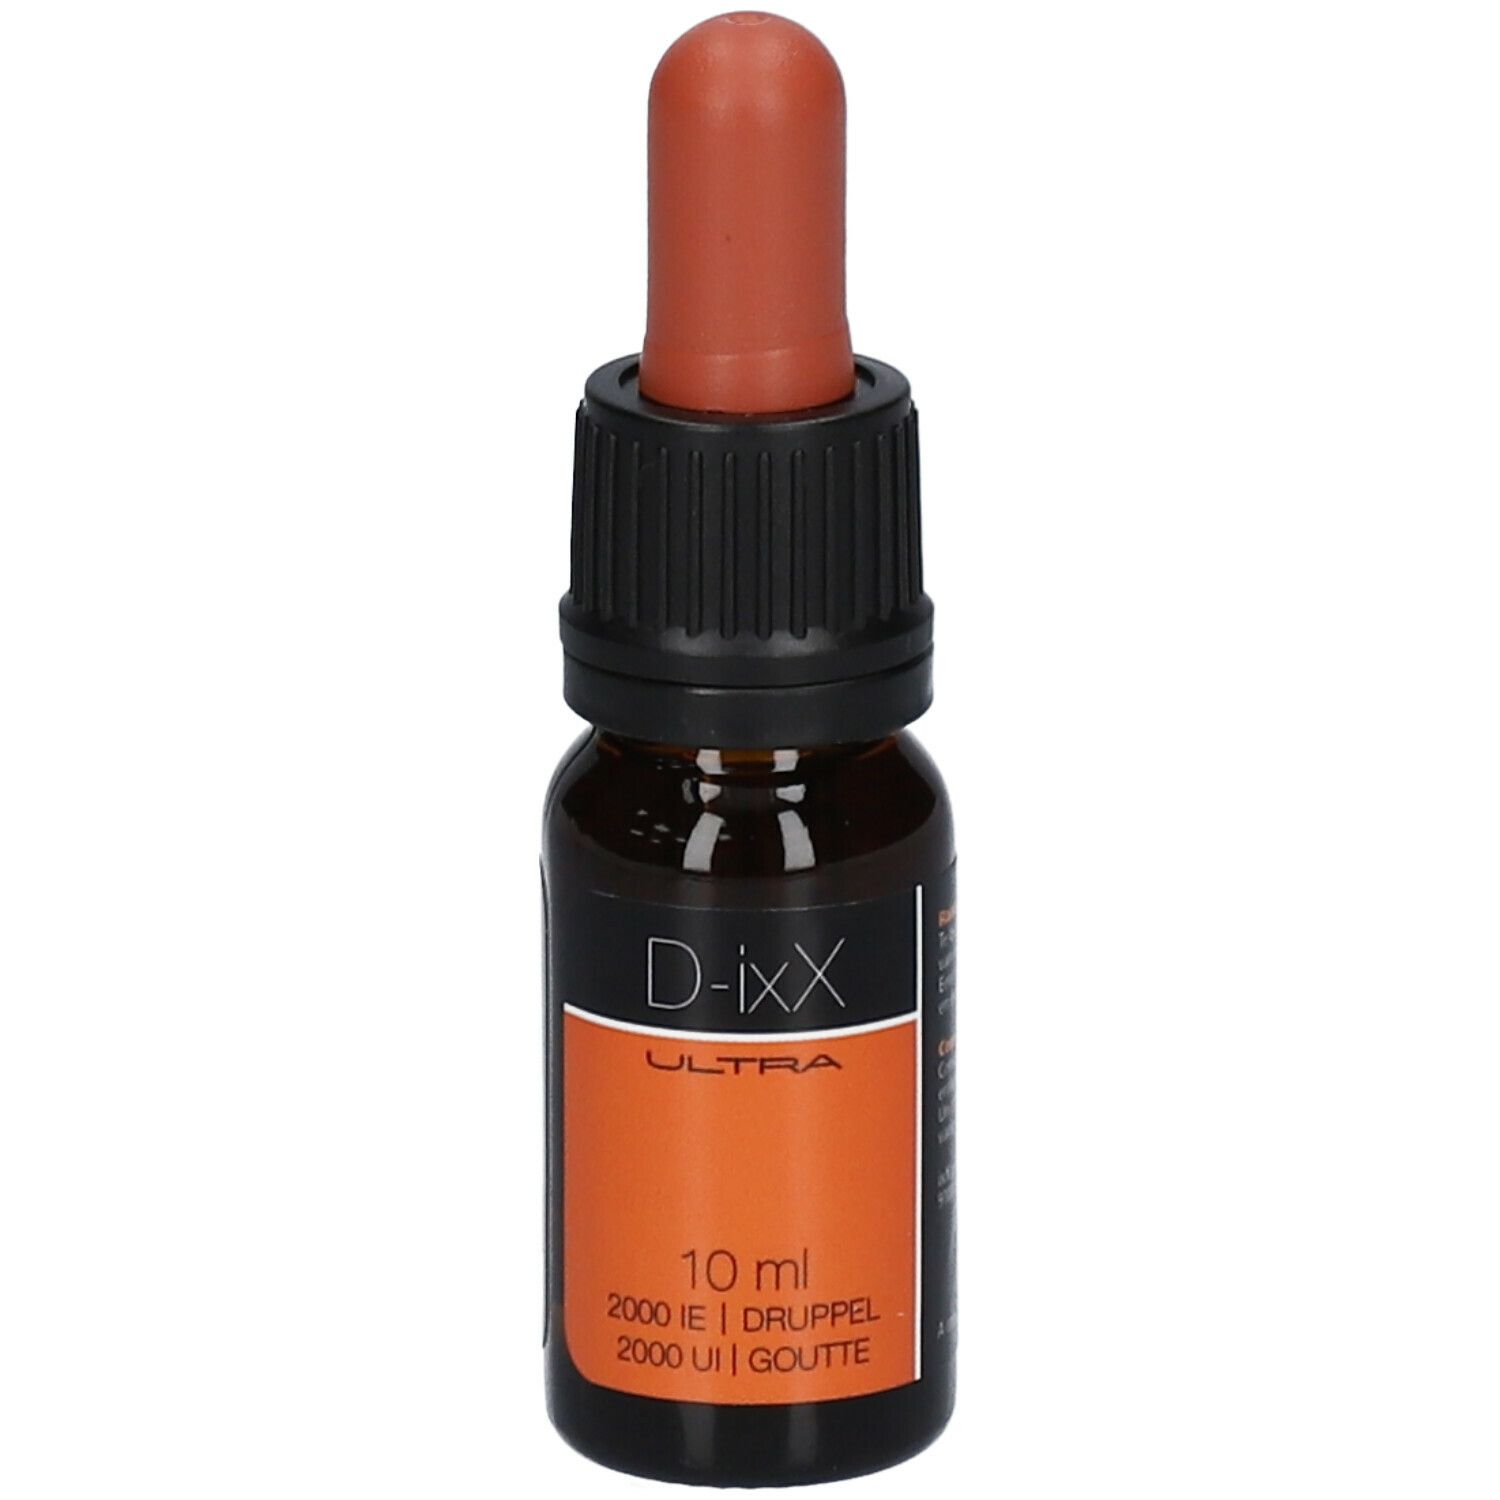 ixX Pharma D-ixx Ultra